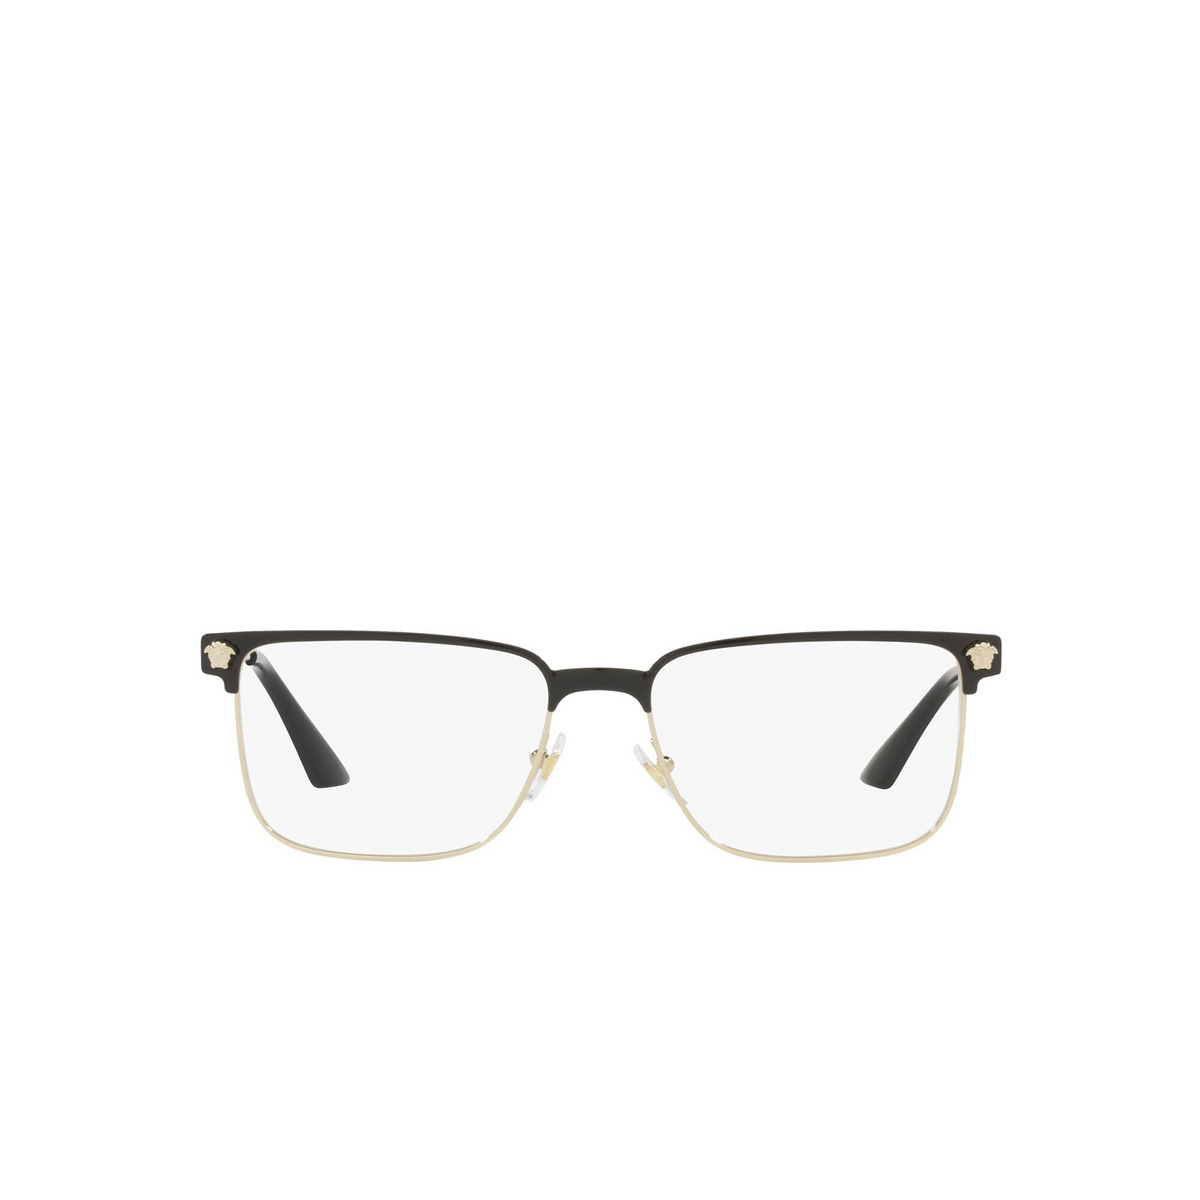 Versace® Rectangle Eyeglasses: VE1276 color Black / Pale Gold 1371 - front view.